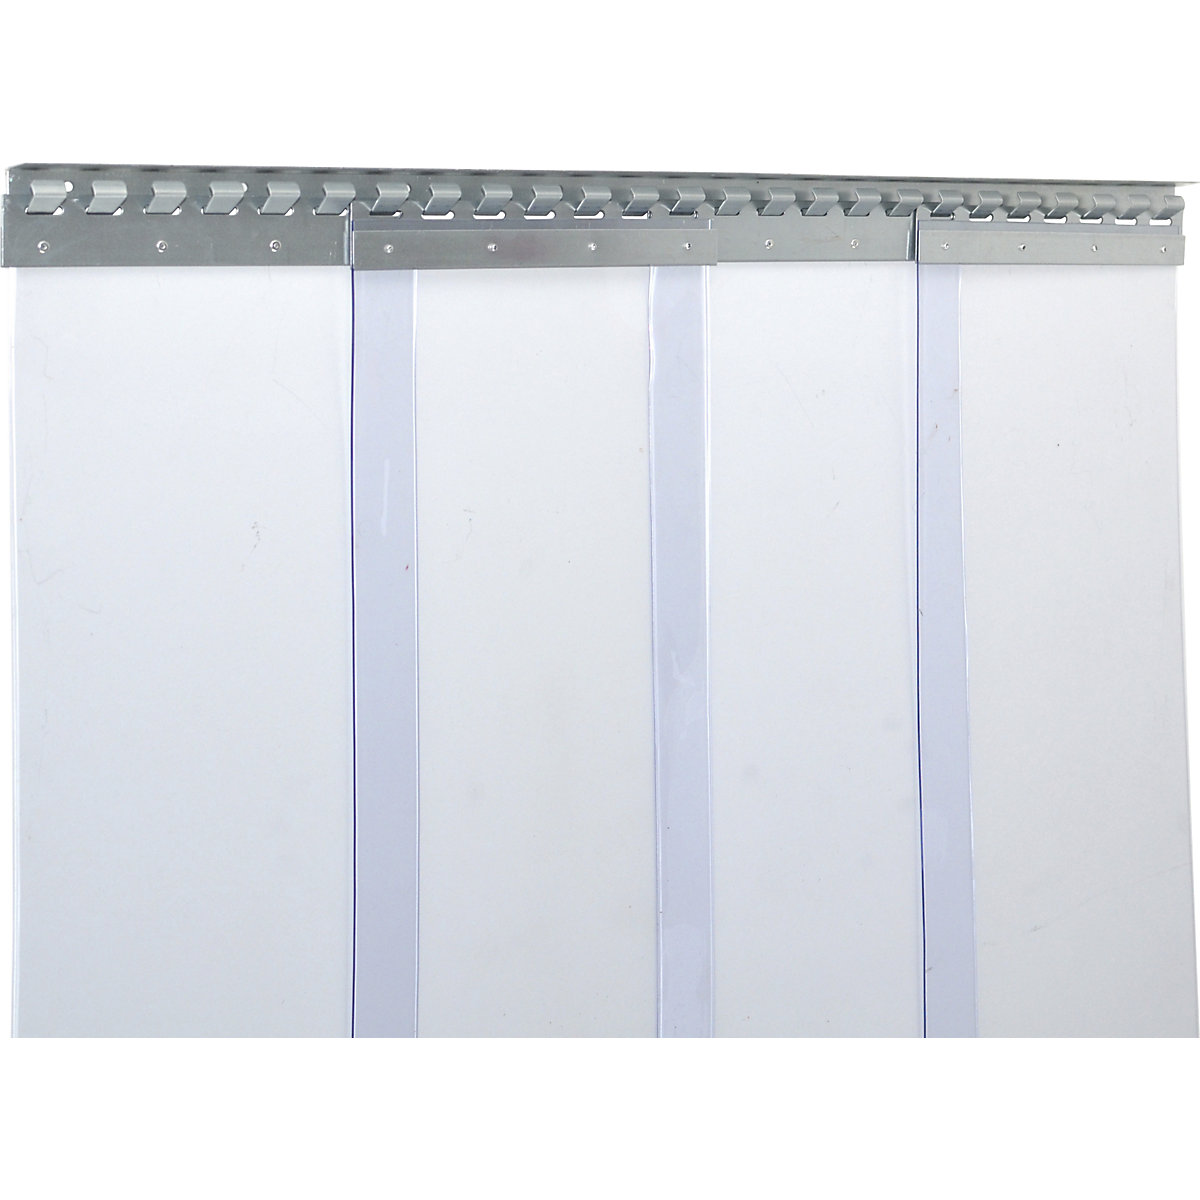 Strip curtain, price/m²: width x thickness 300 x mm kaiserkraft